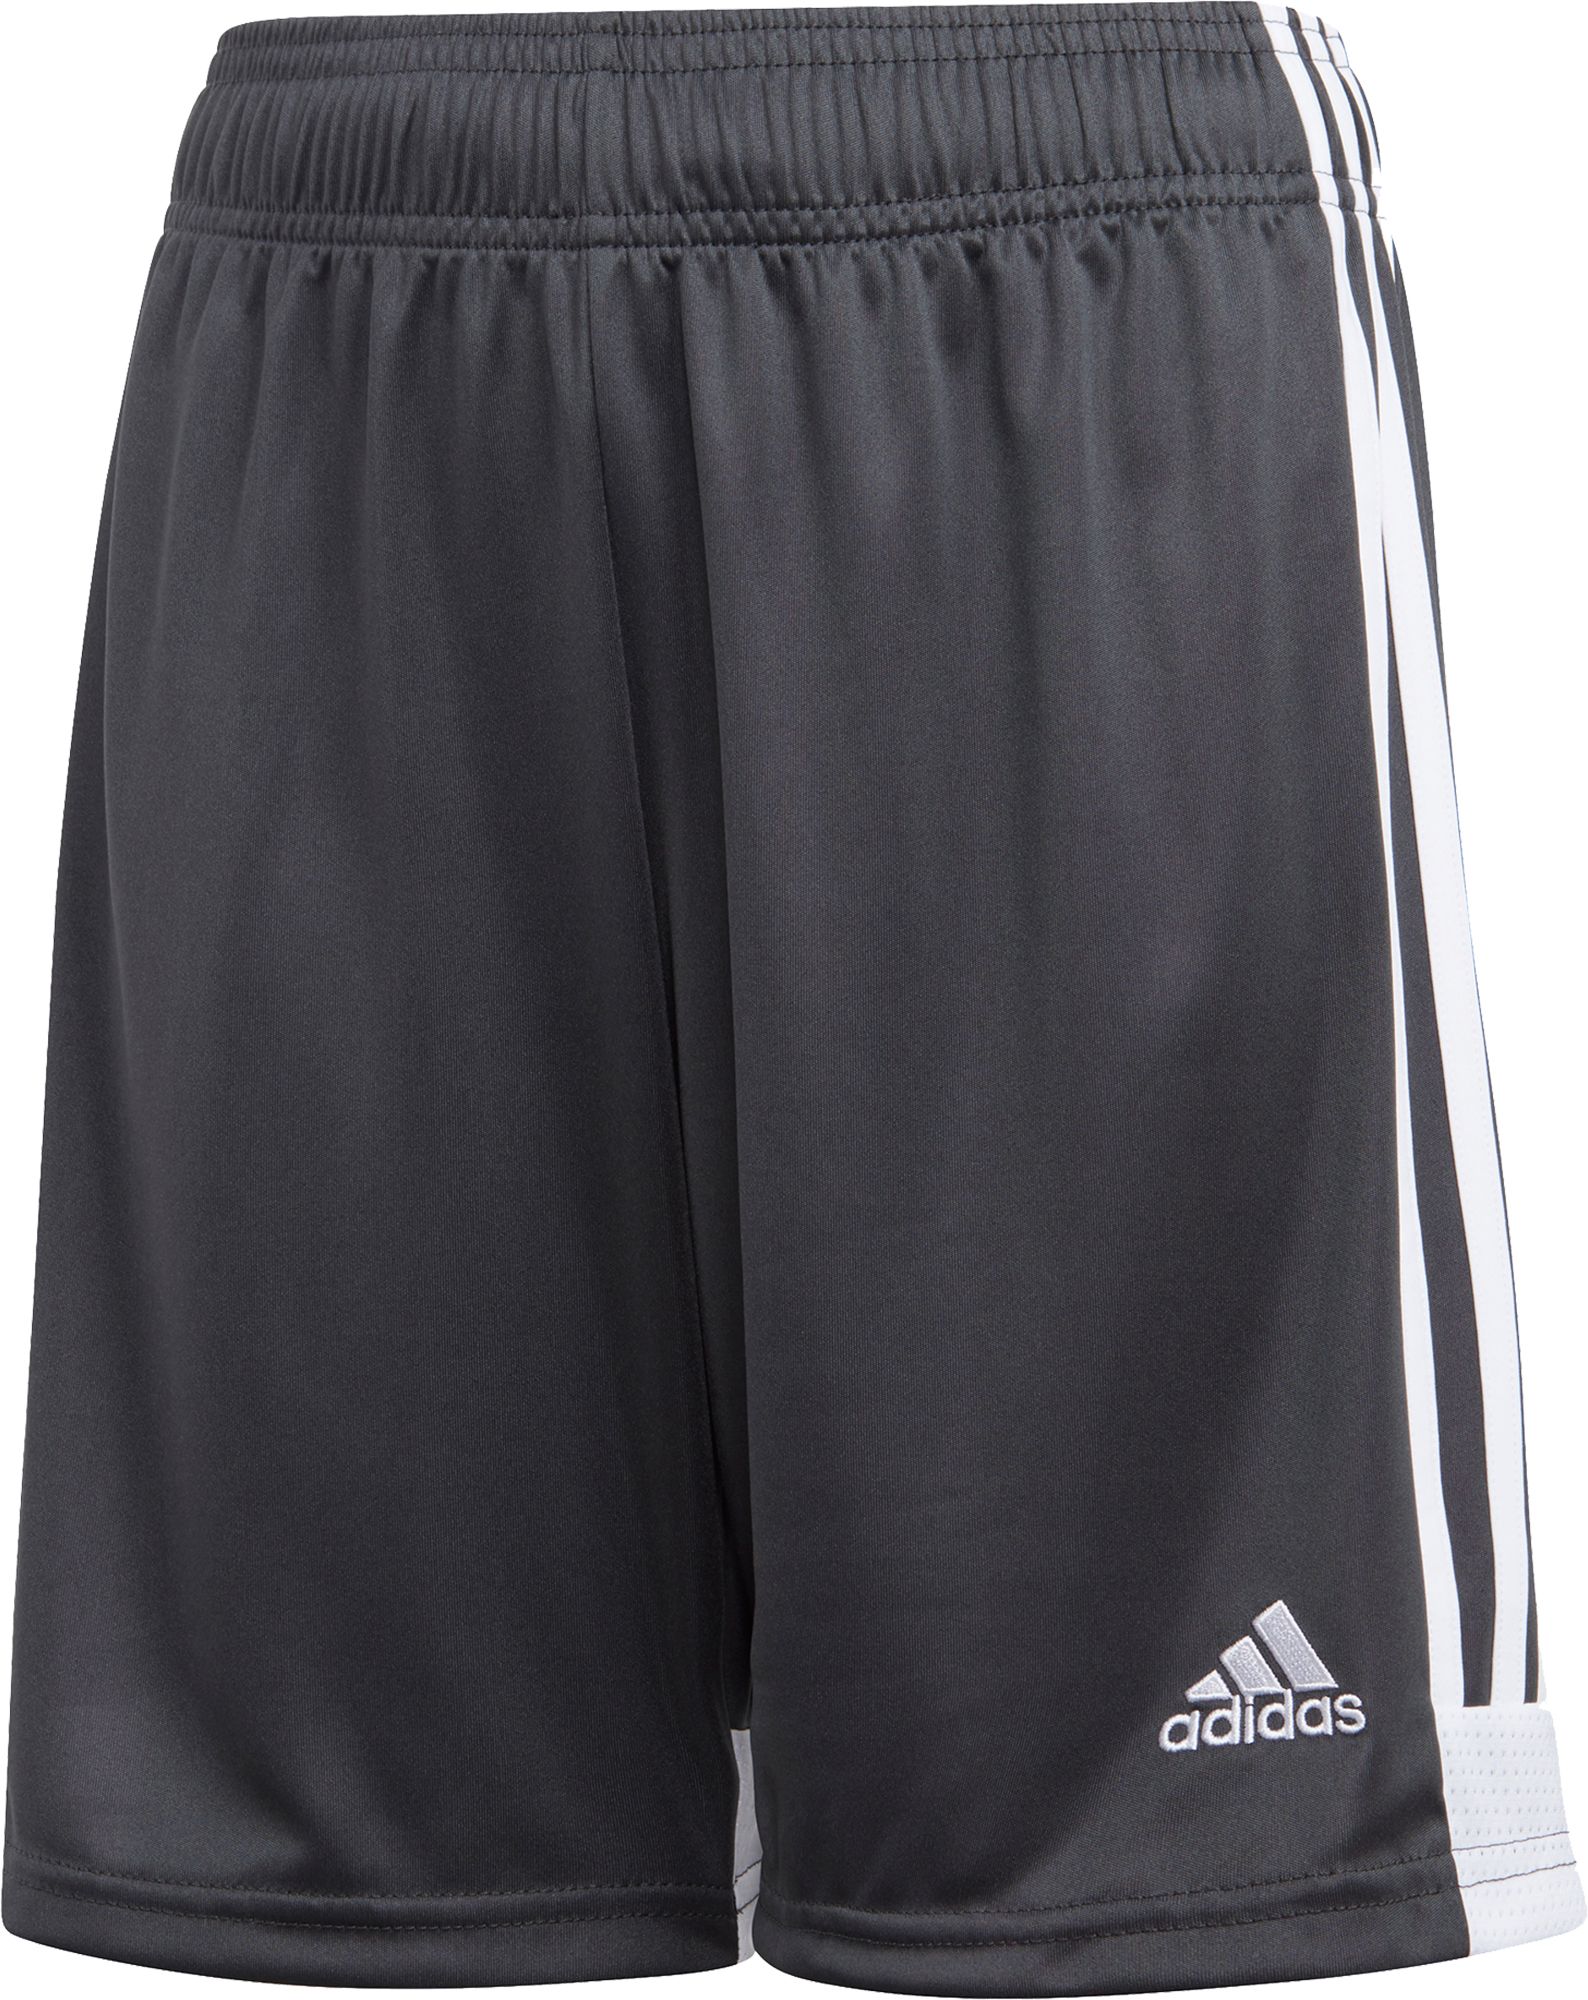 girls adidas soccer shorts